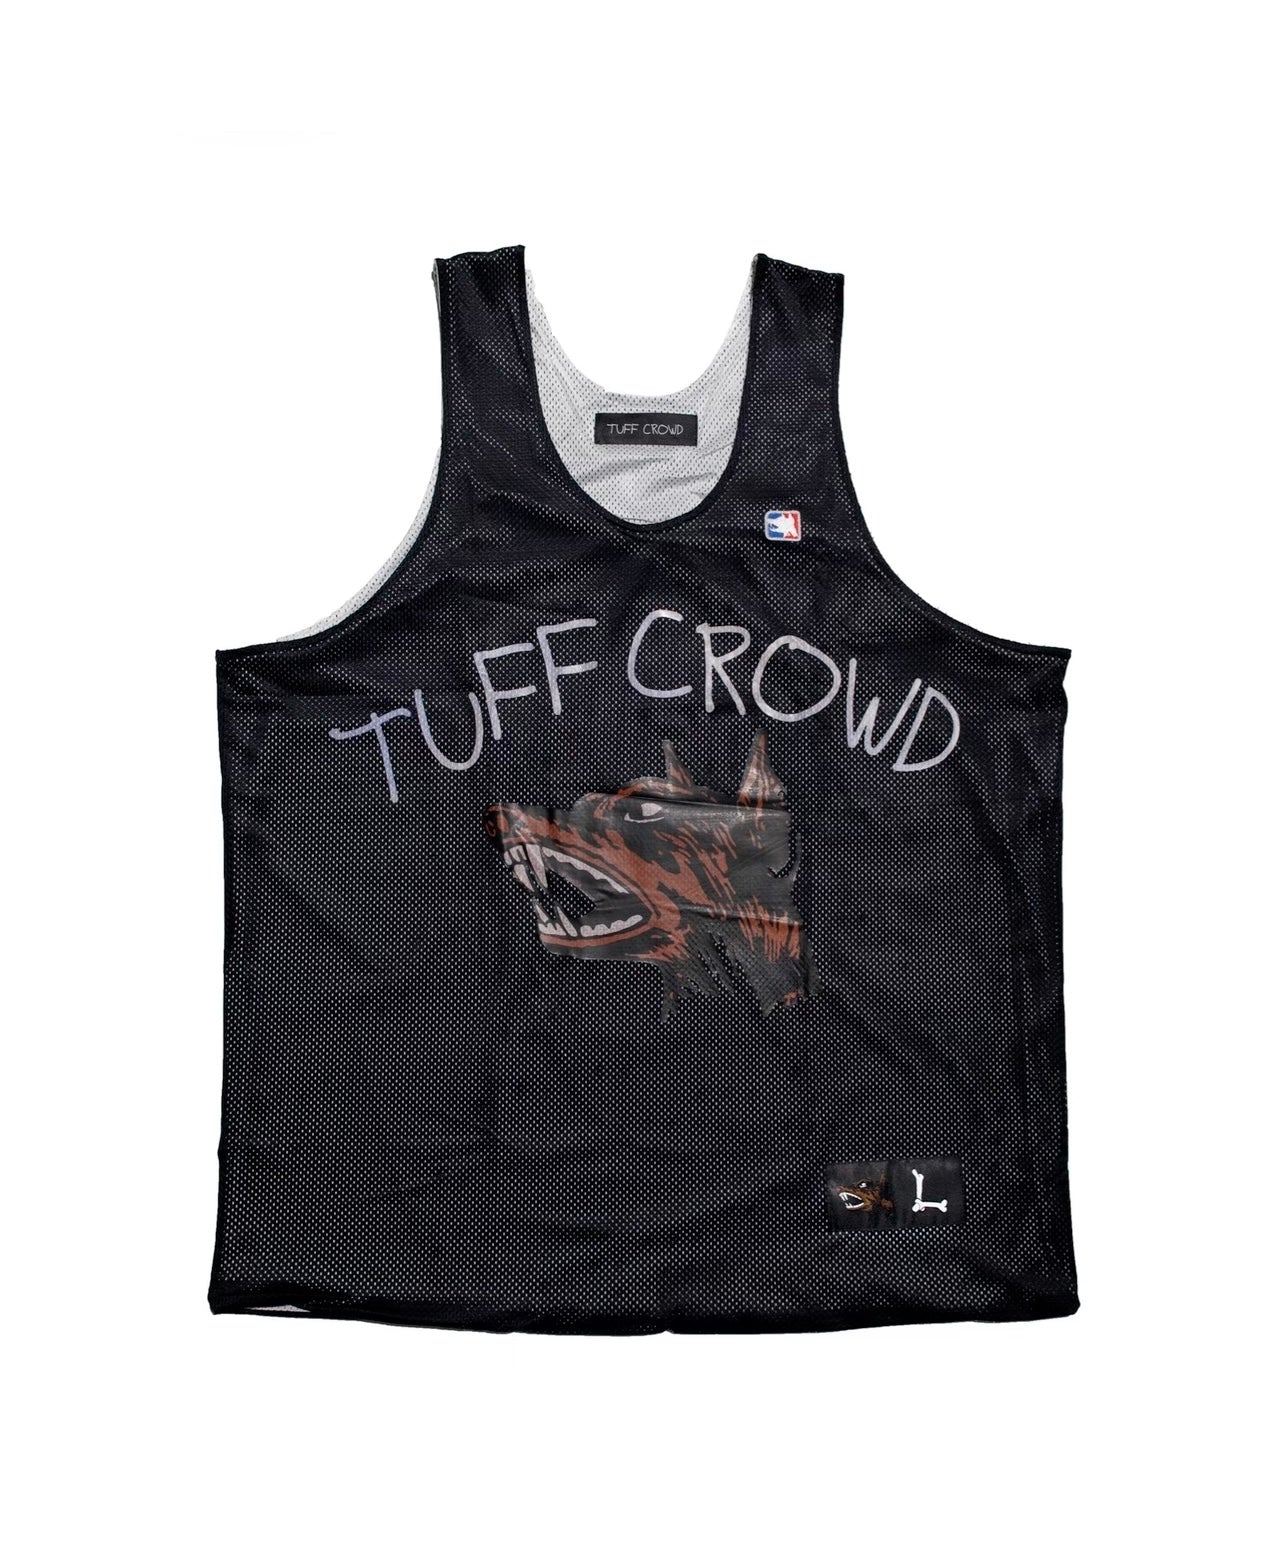 TOPS – Tuff Crowd